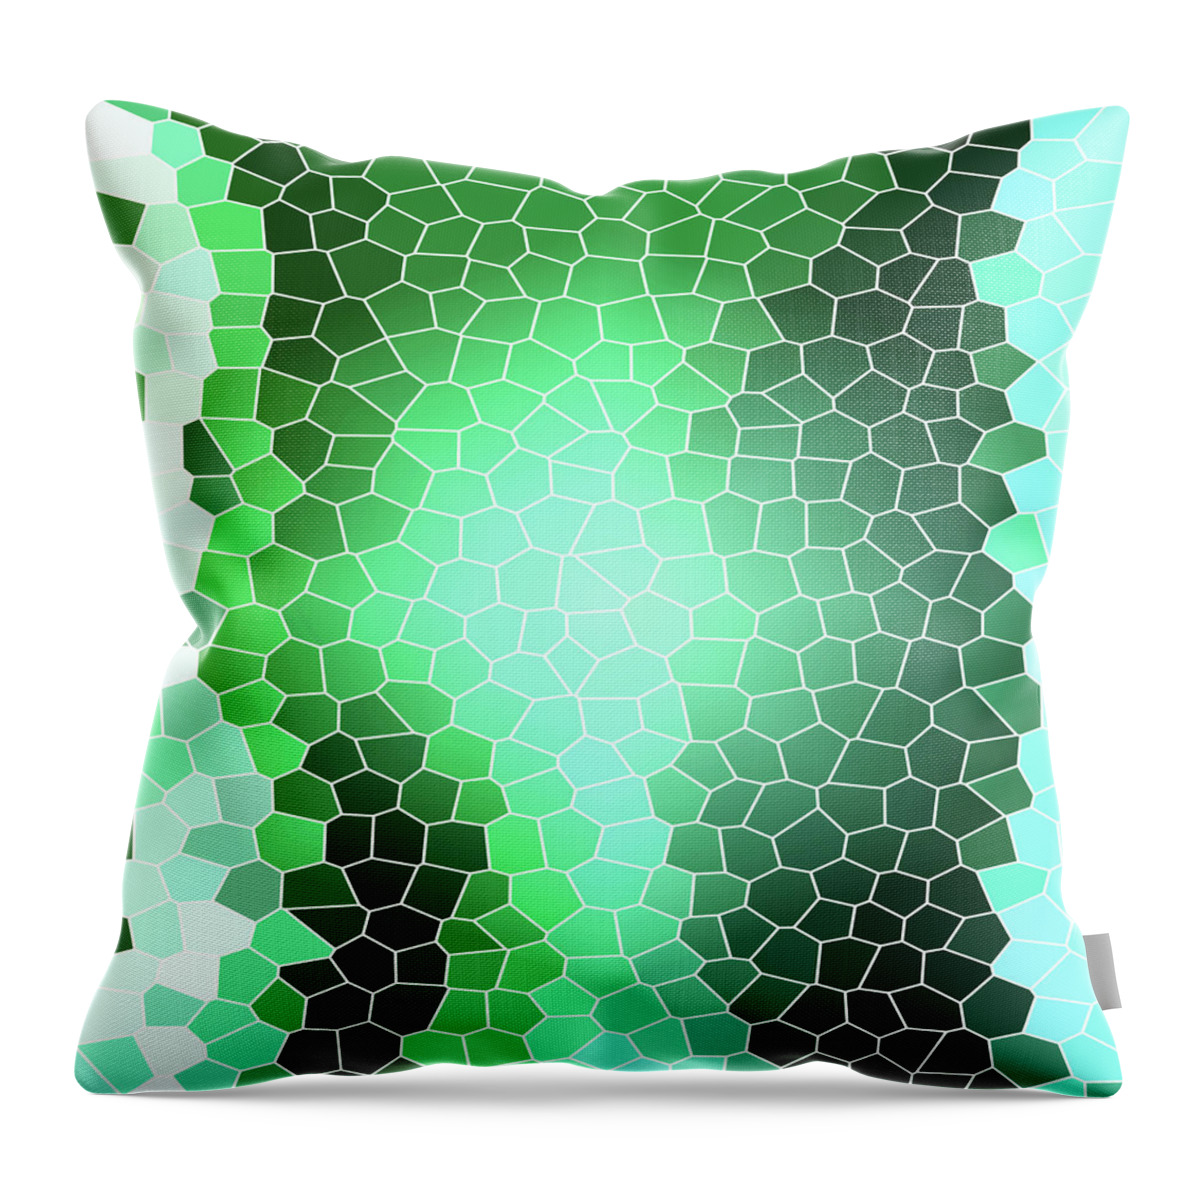 Green Throw Pillow featuring the digital art Green Skin by Melinda Firestone-White